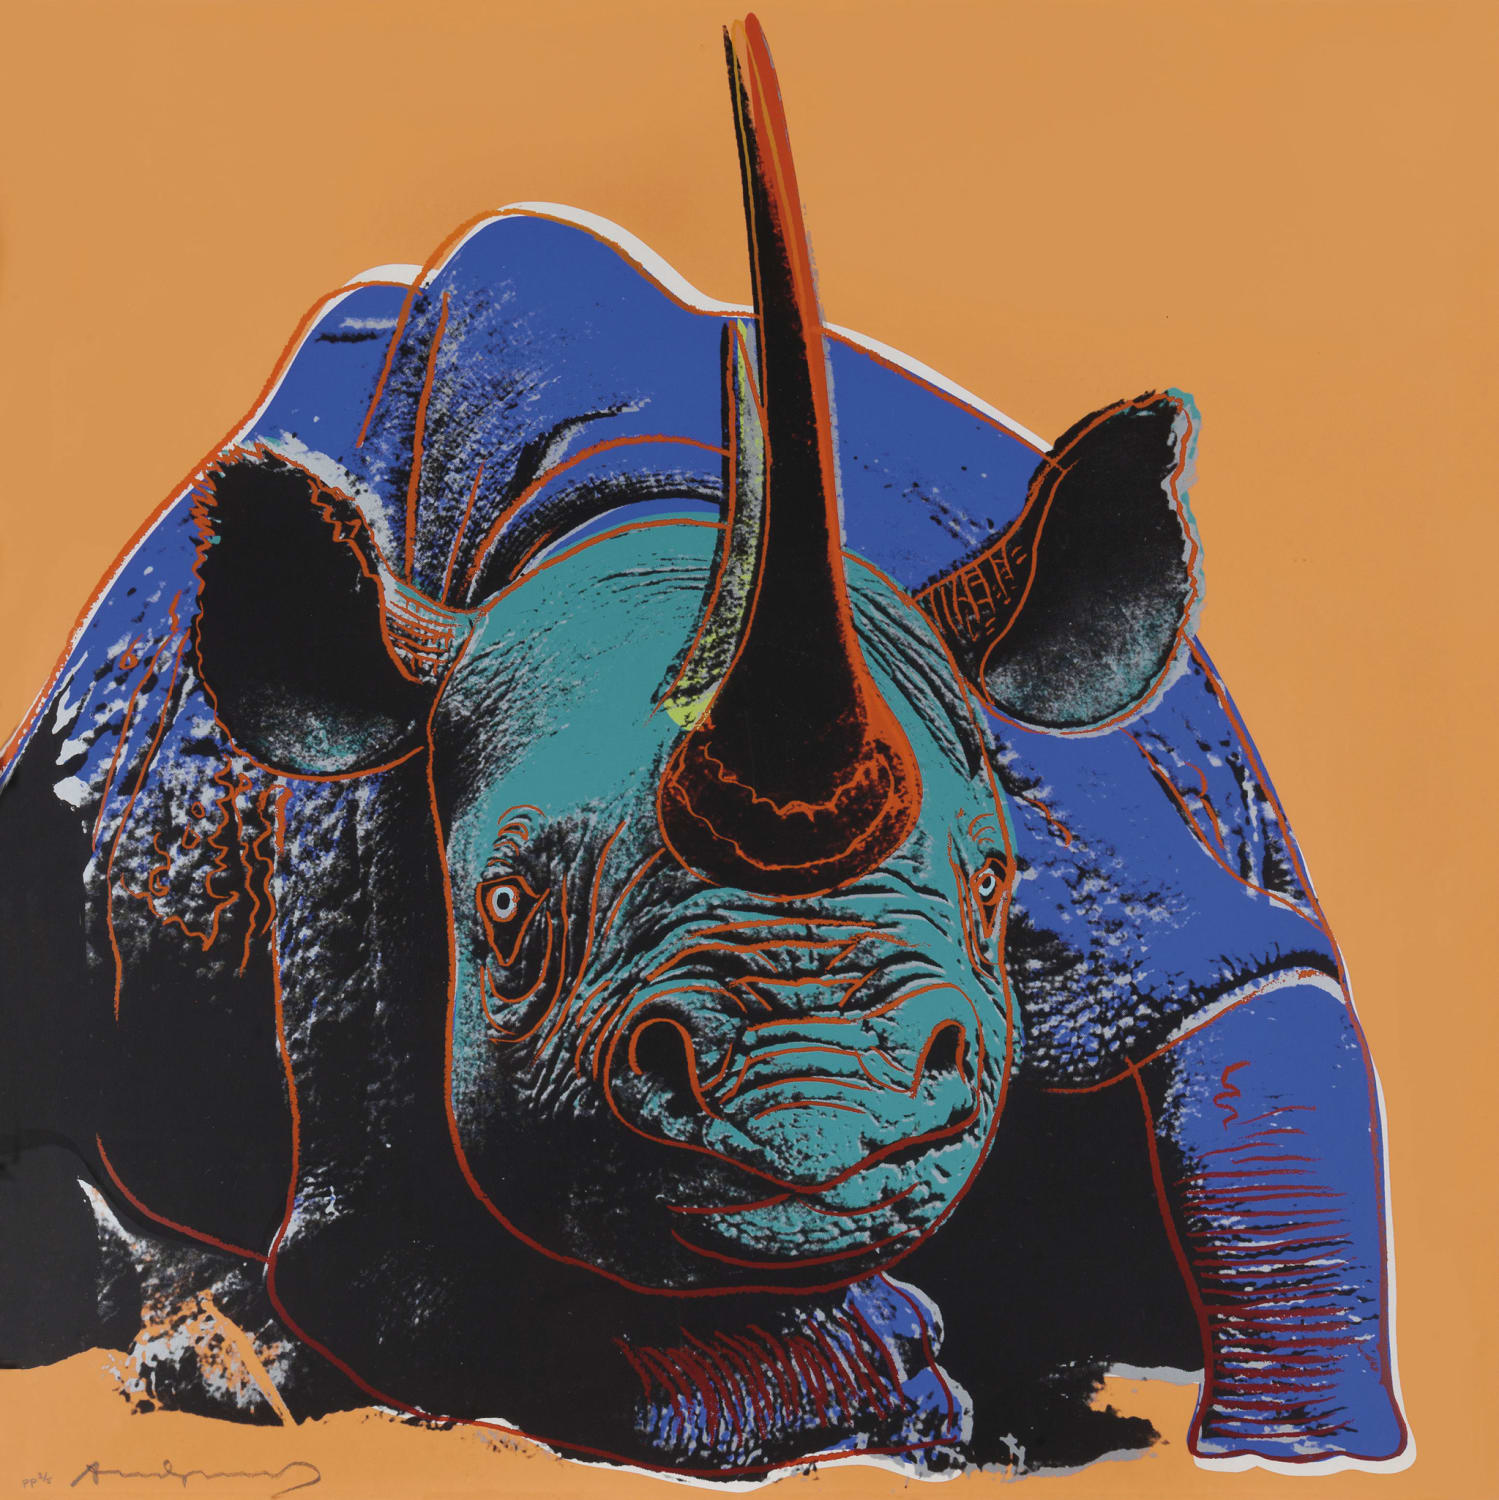 Andy Warhol - Black Rhinoceros (from the Endangered Species series), 1983. Screenprint on board.